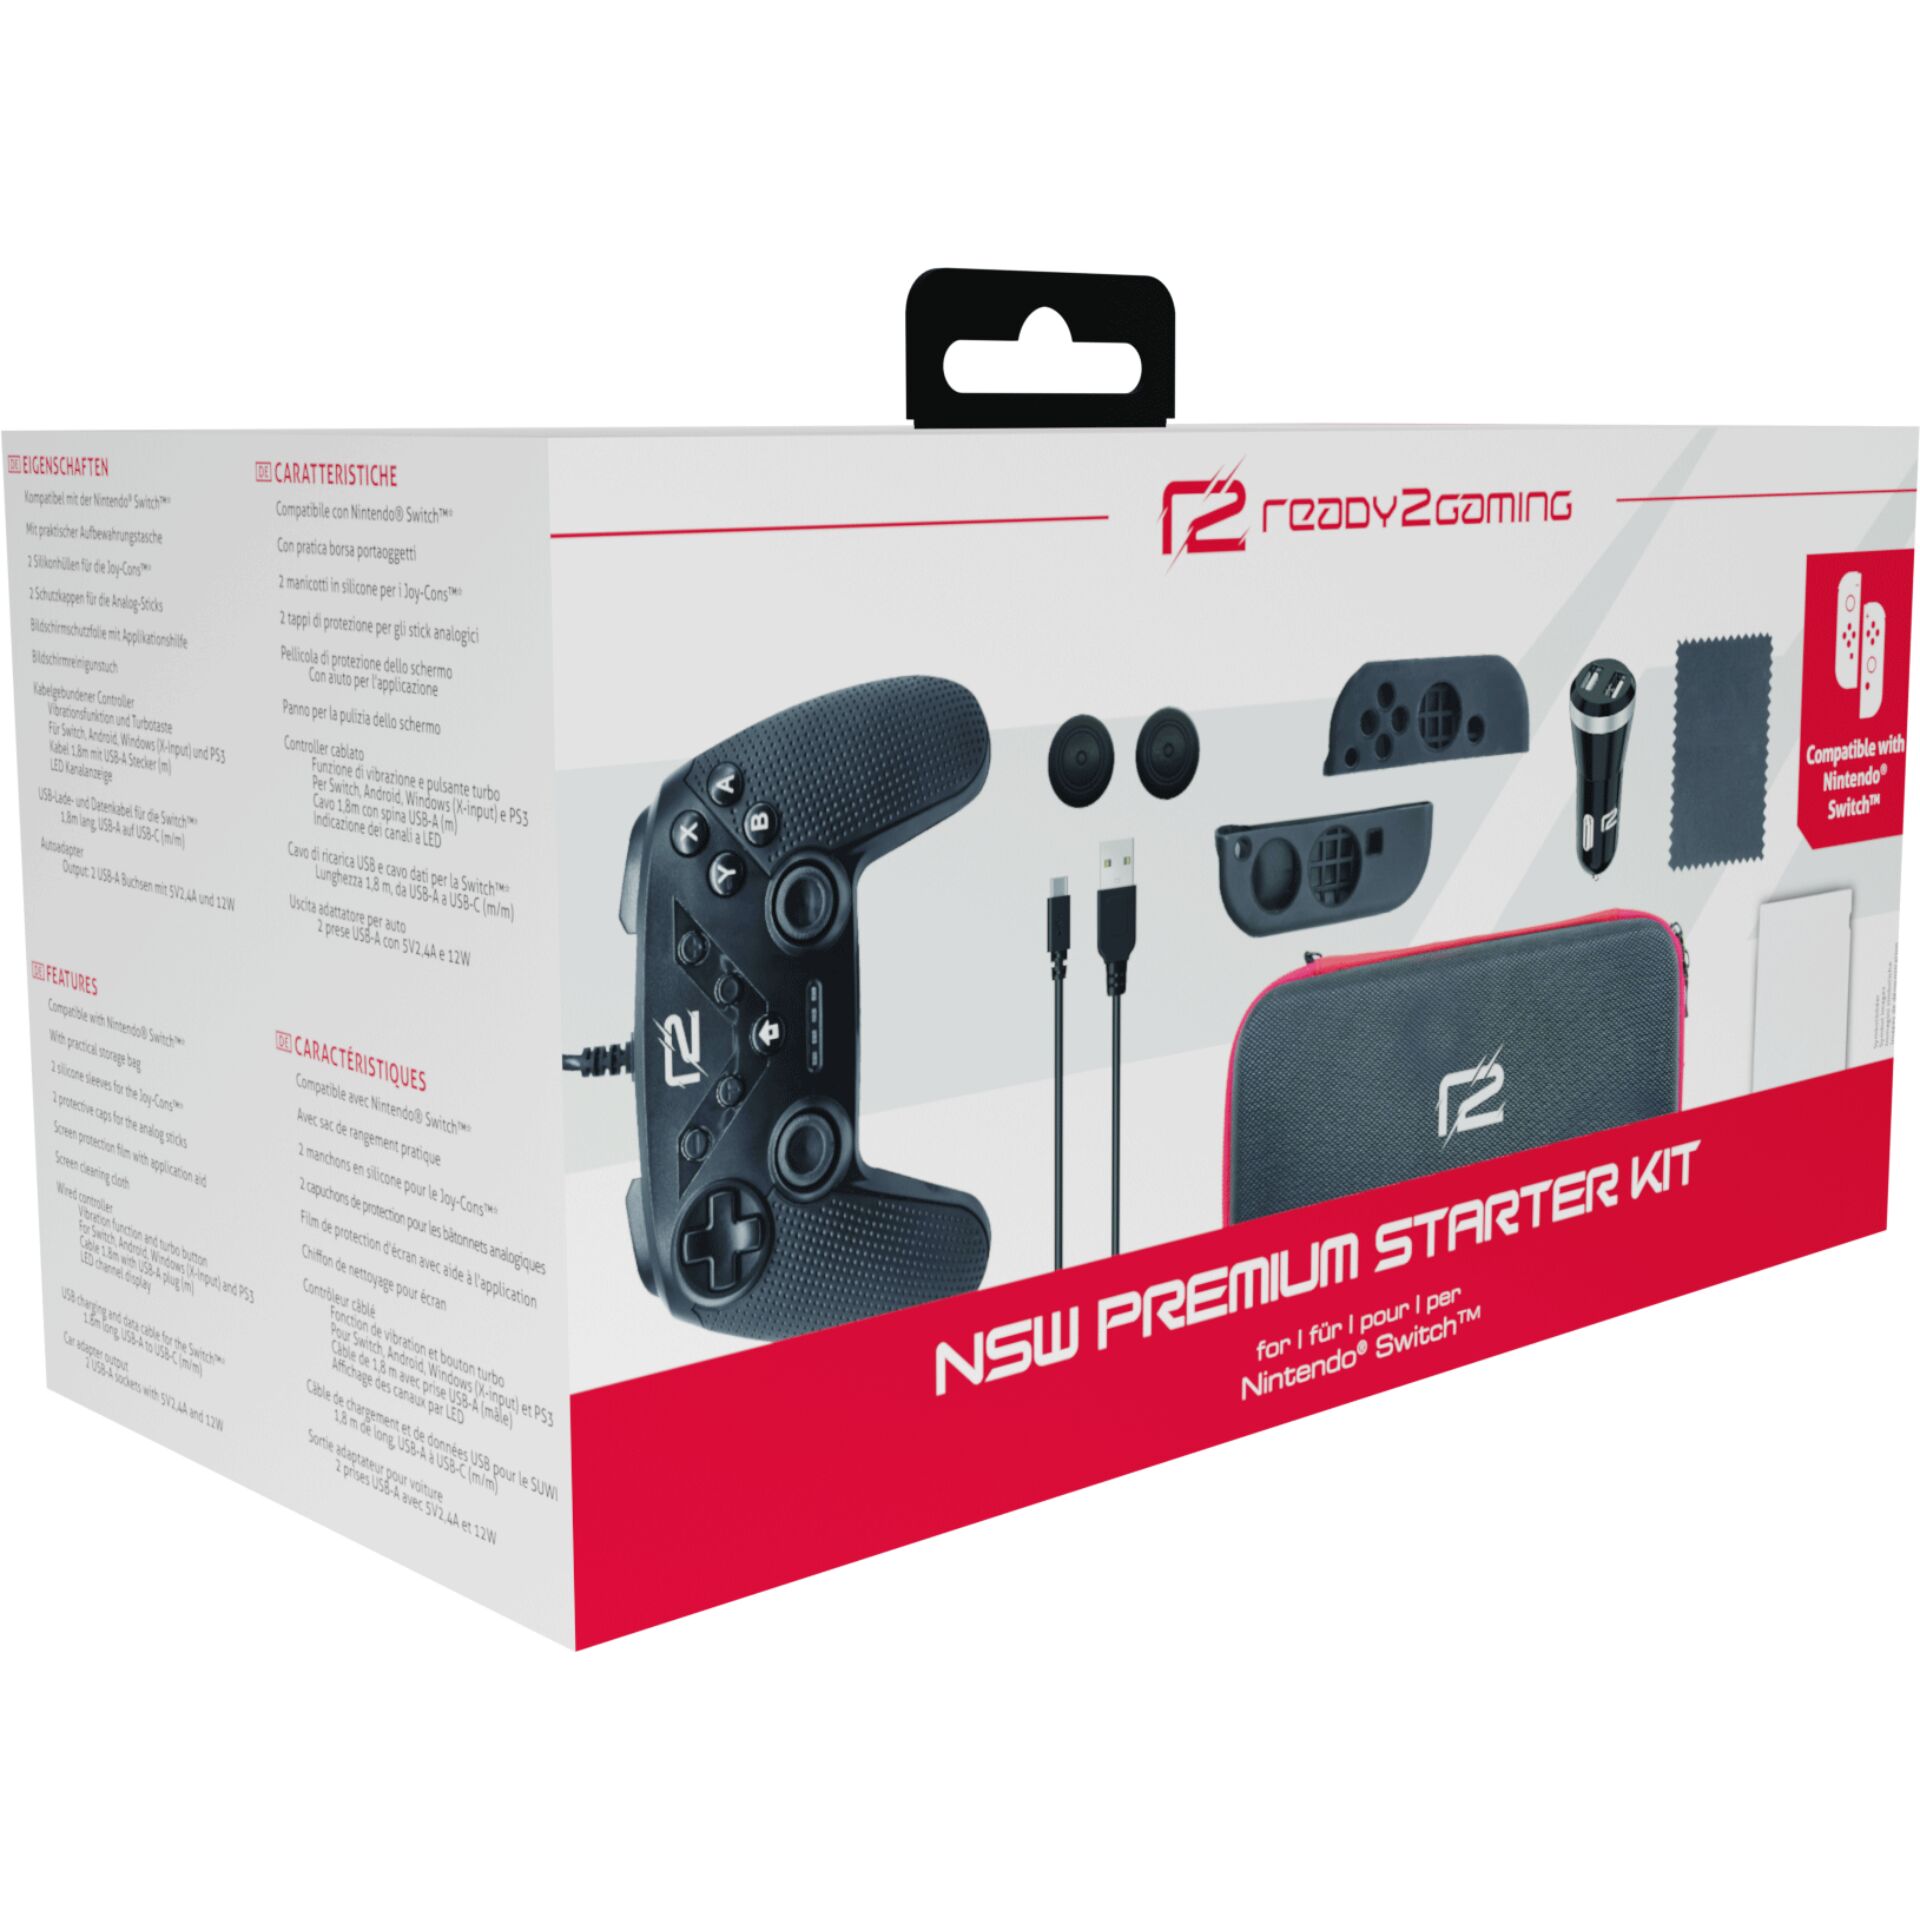 Ready2gaming -Nintendo Switch Kit Premium -Ready2gaming (R2GNSWKITP) Starter Toys/Spielzeug